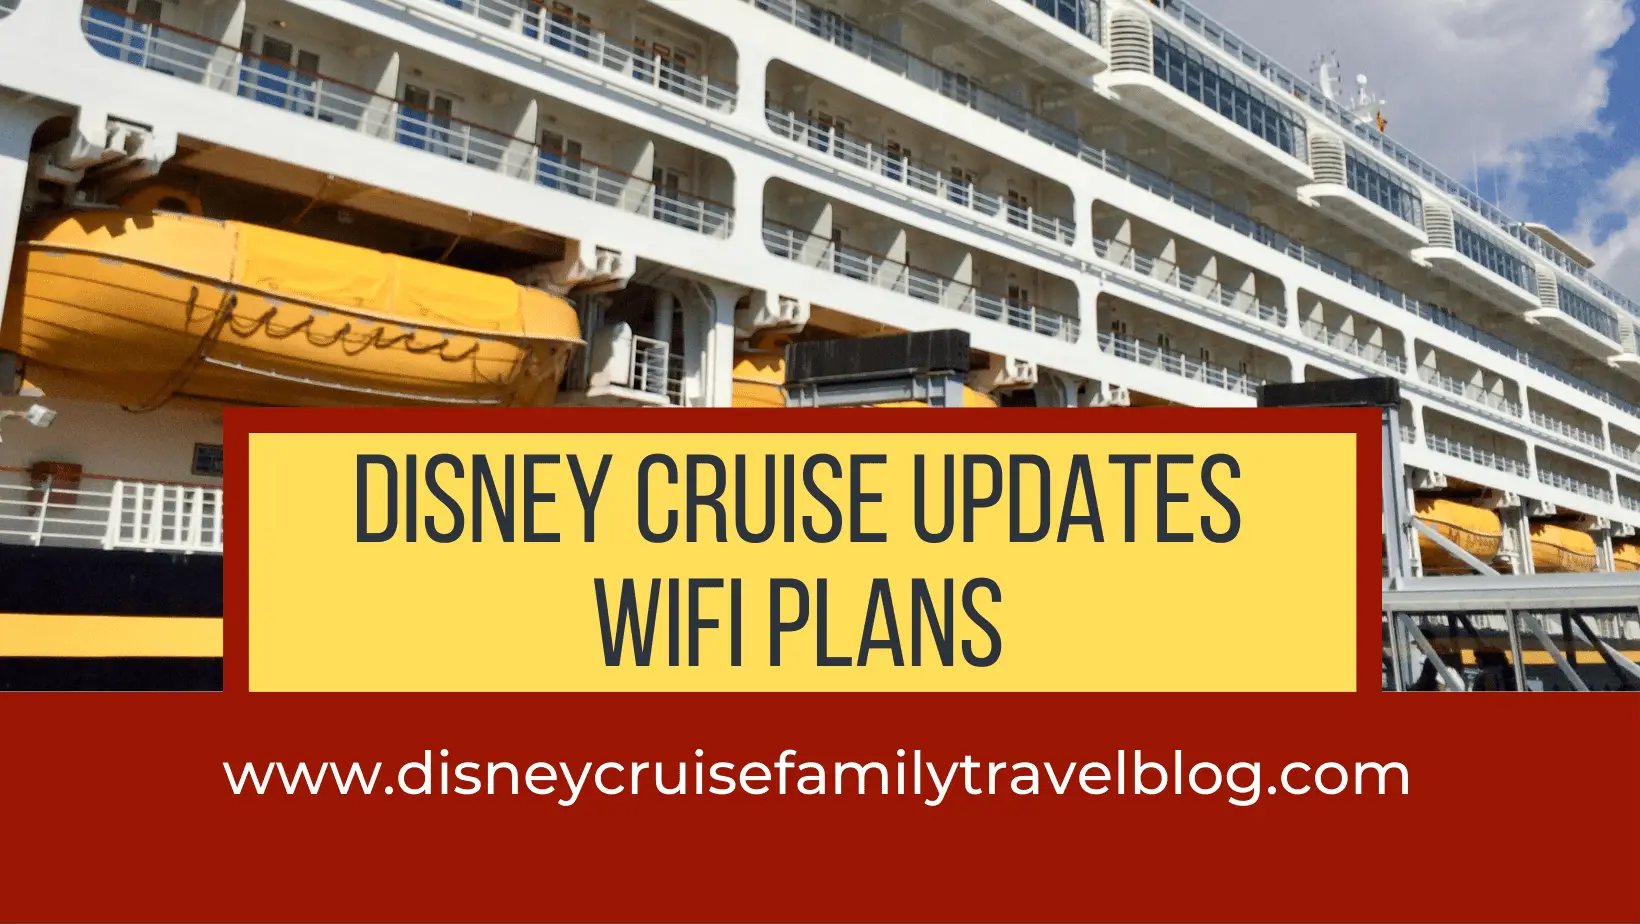 Disney Cruise Updates WiFi Plans - The Disney Cruise Family Travel Blog